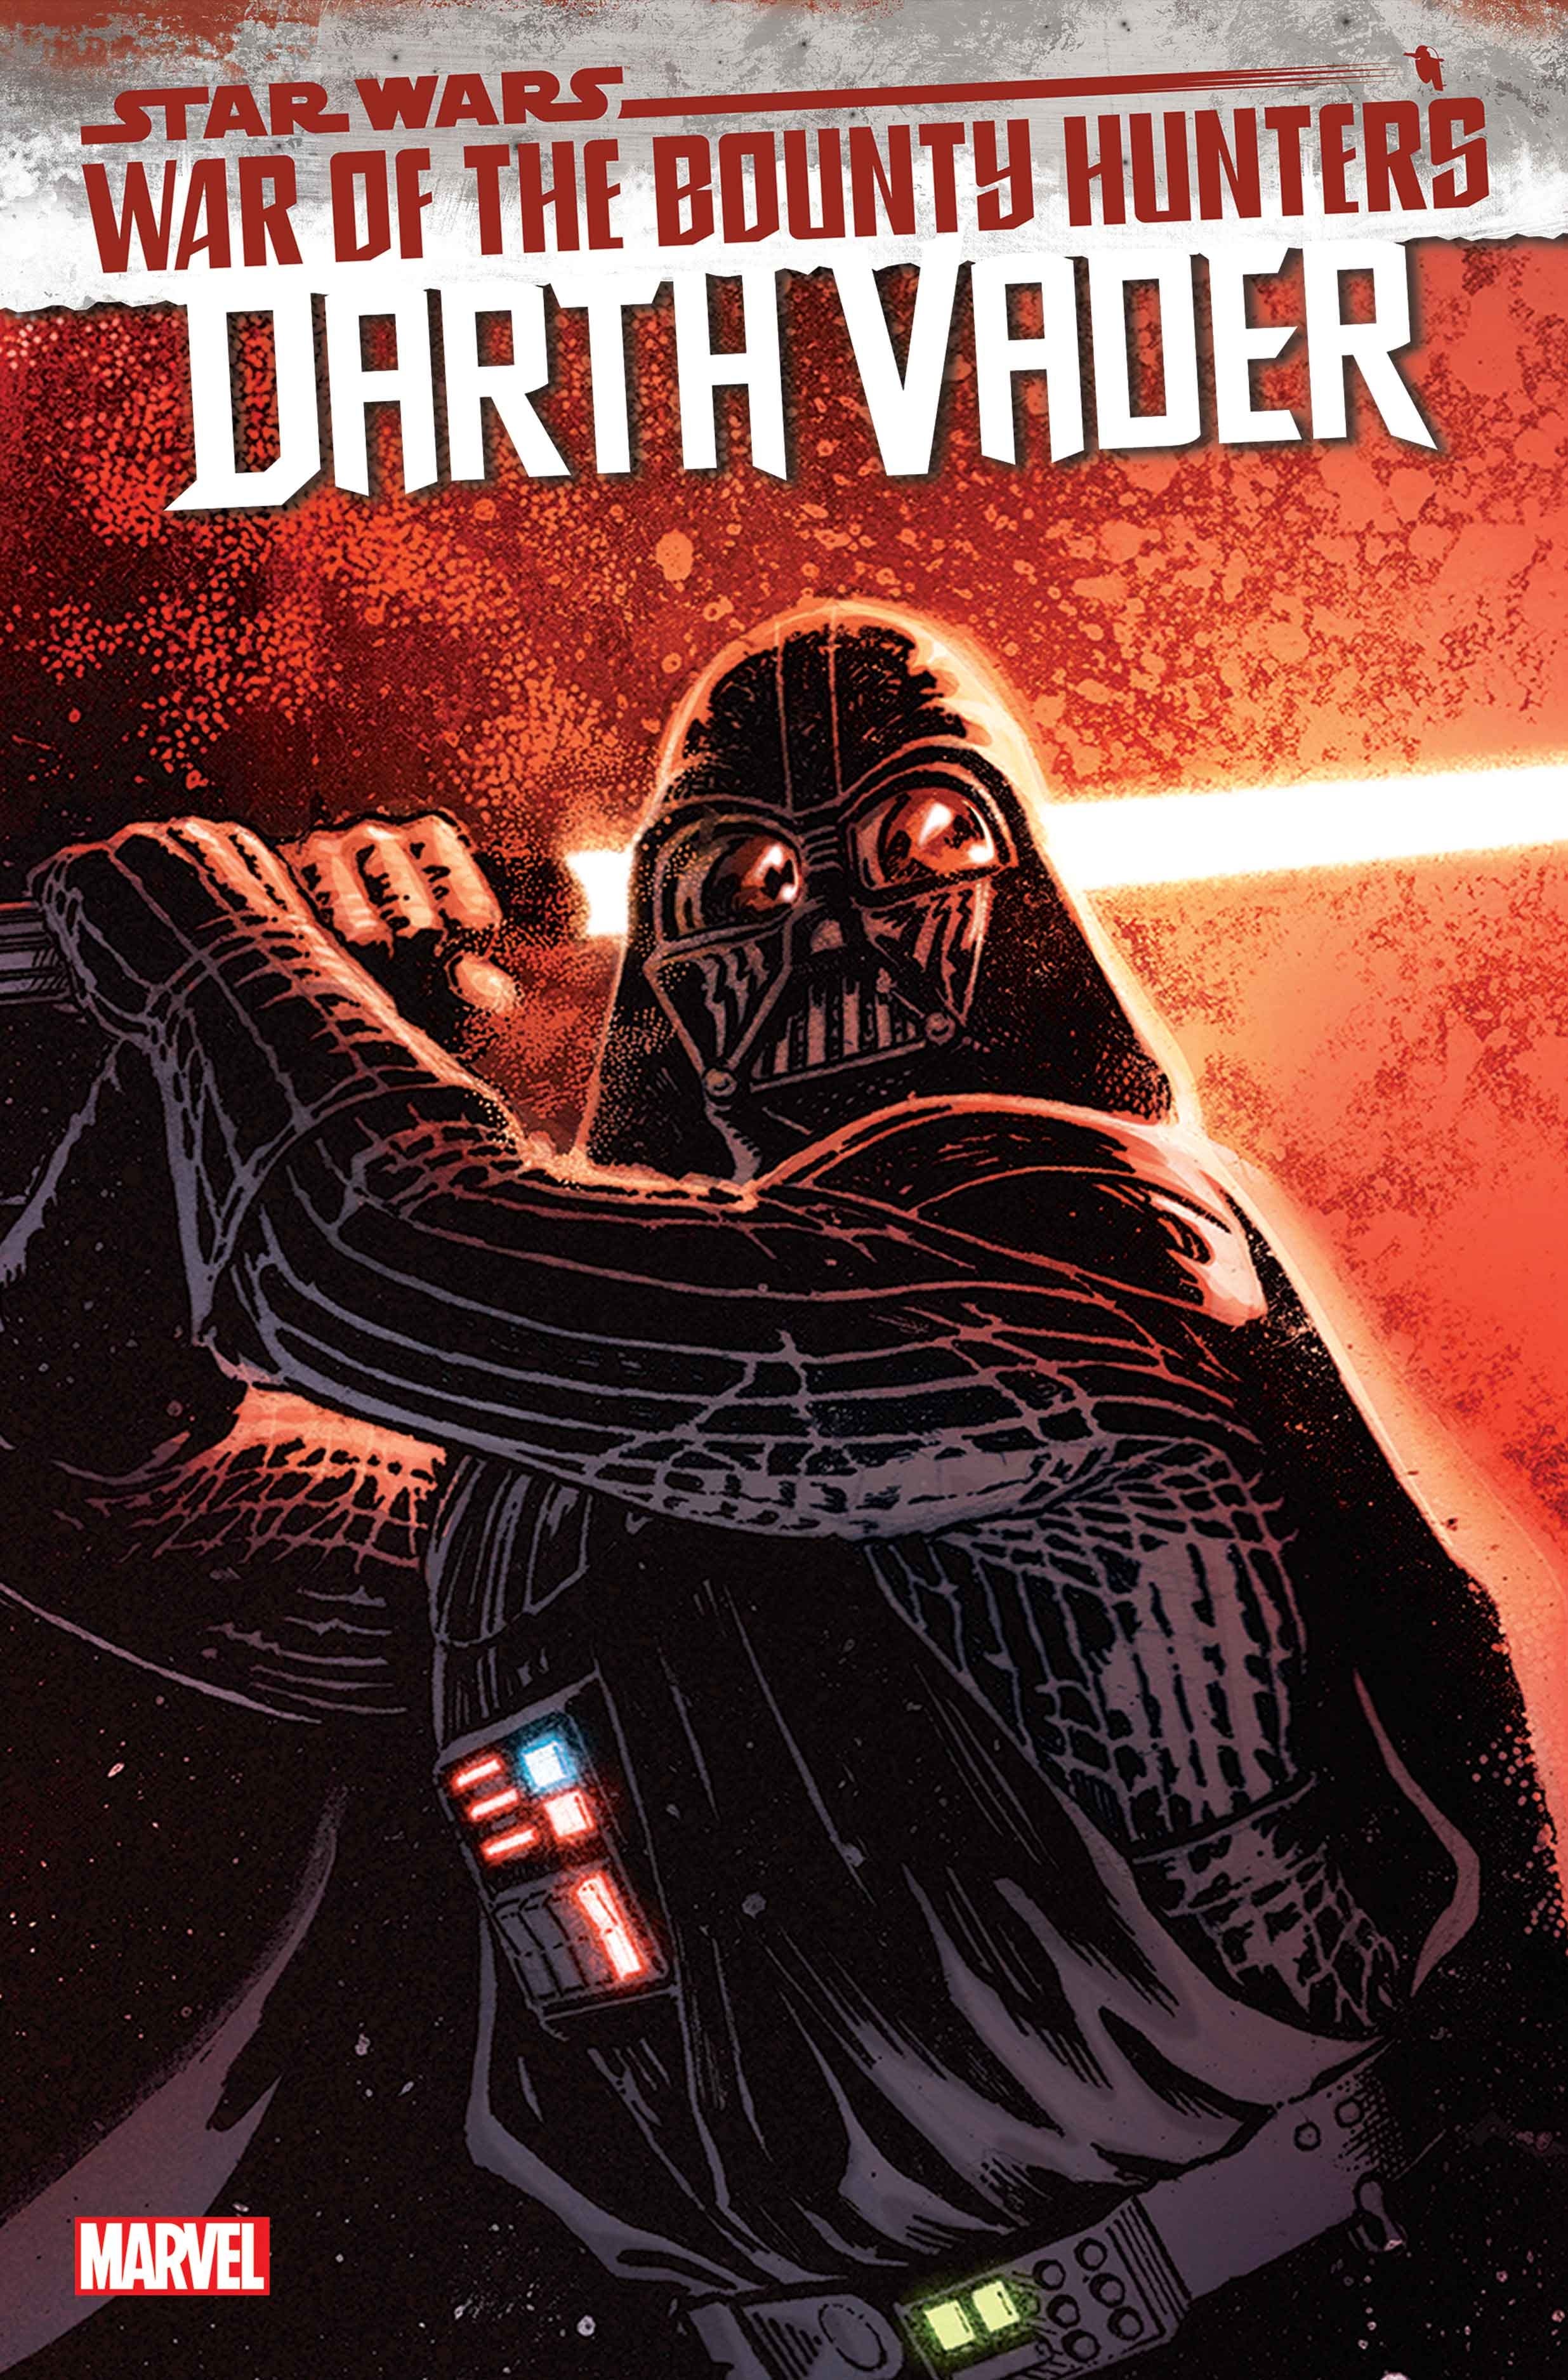 Star Wars Darth Vader #16 (WotBH)